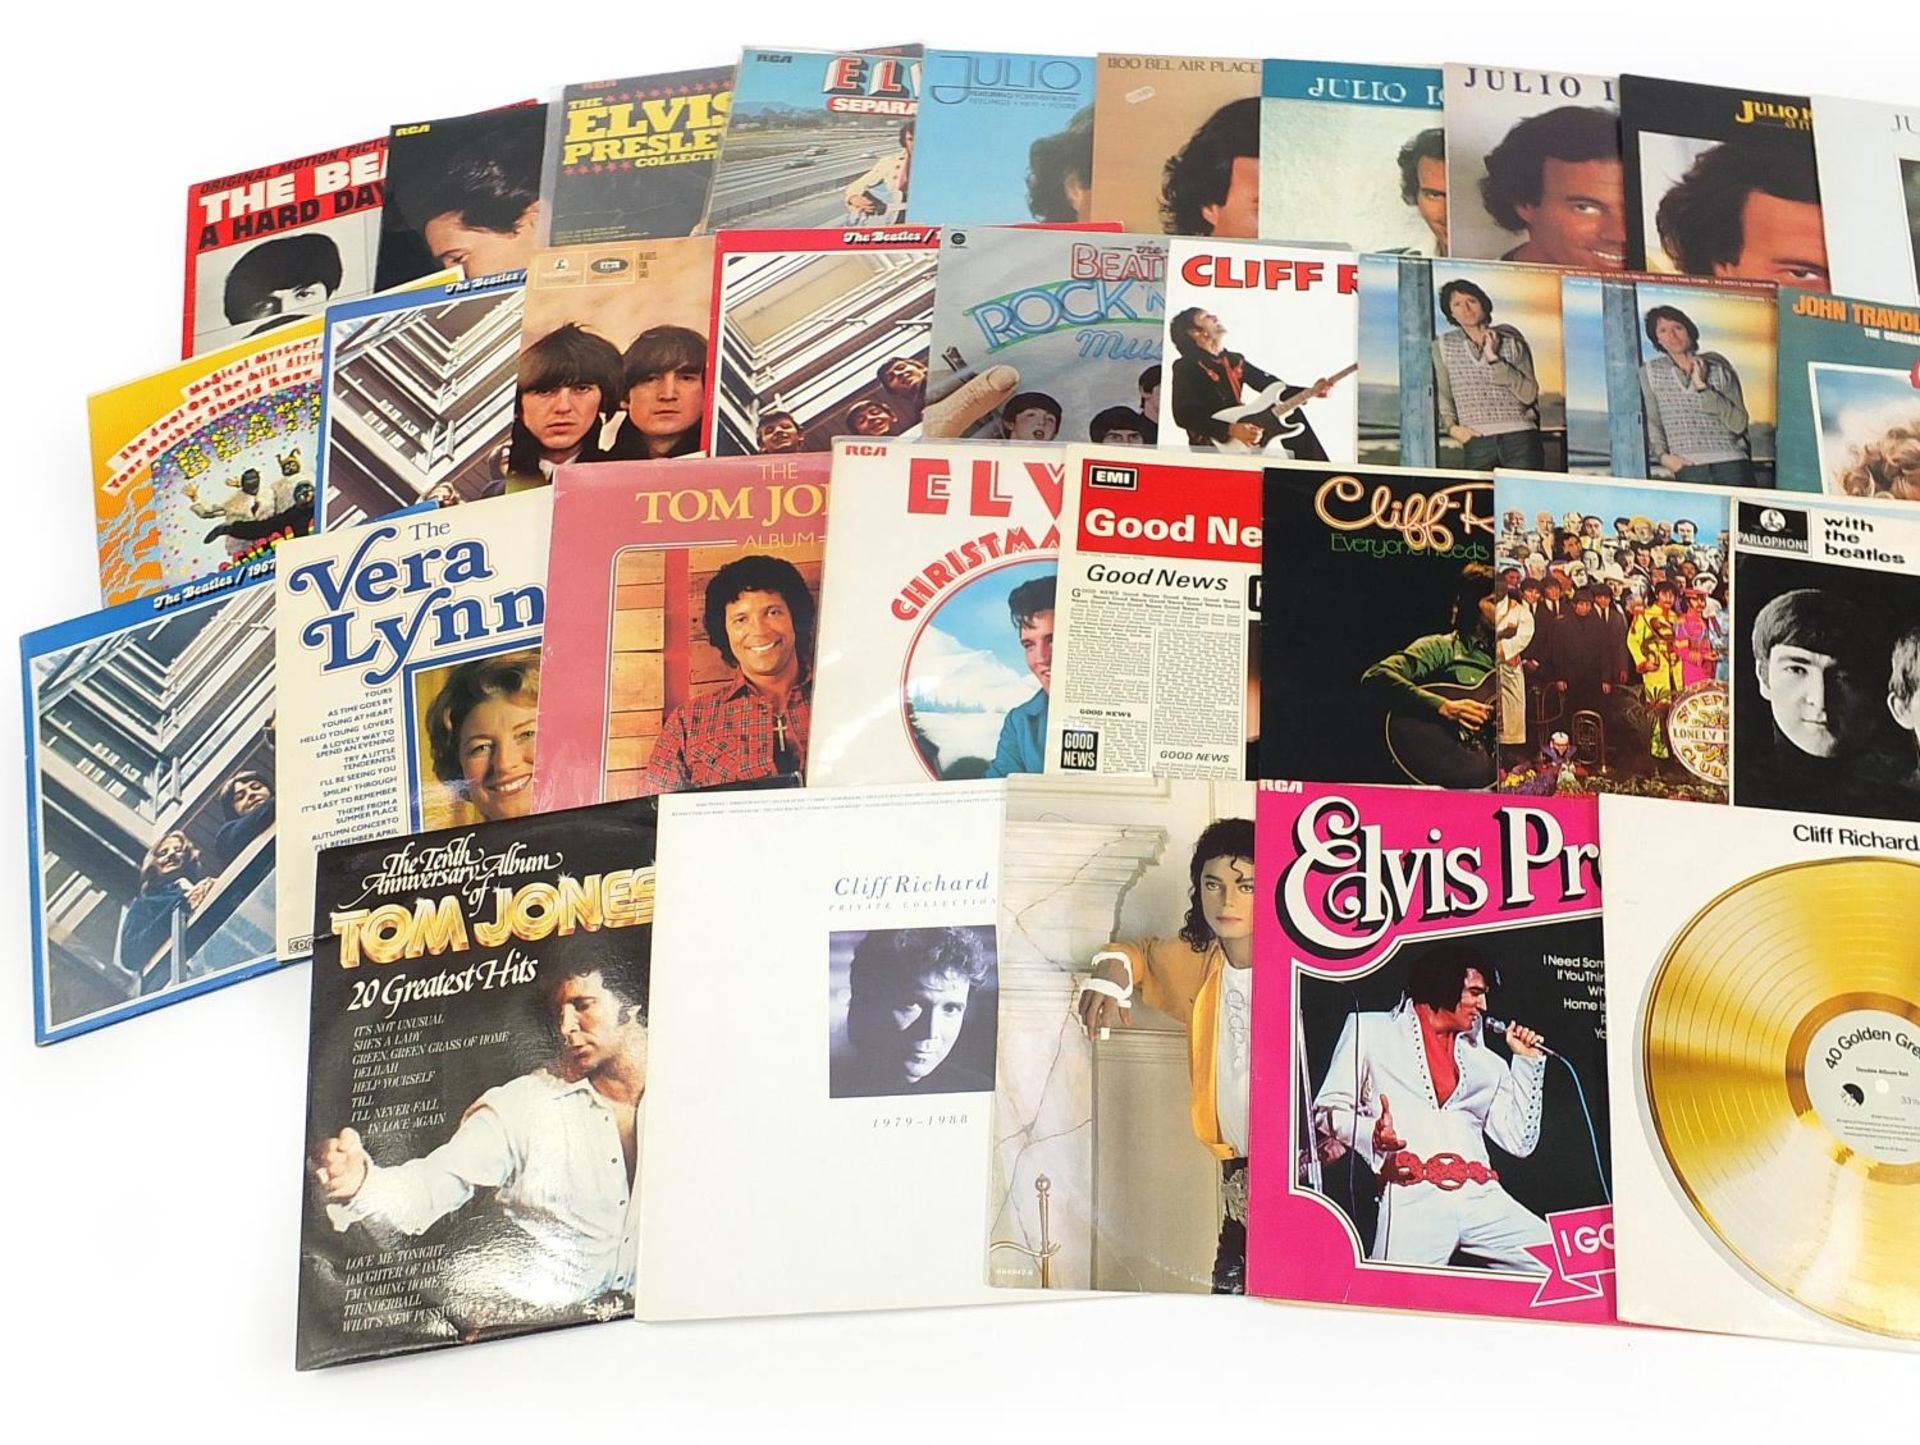 Vinyl LP records including The Beatles, Elvis Presley, Cliff Richard and Tom Jones - Image 2 of 3